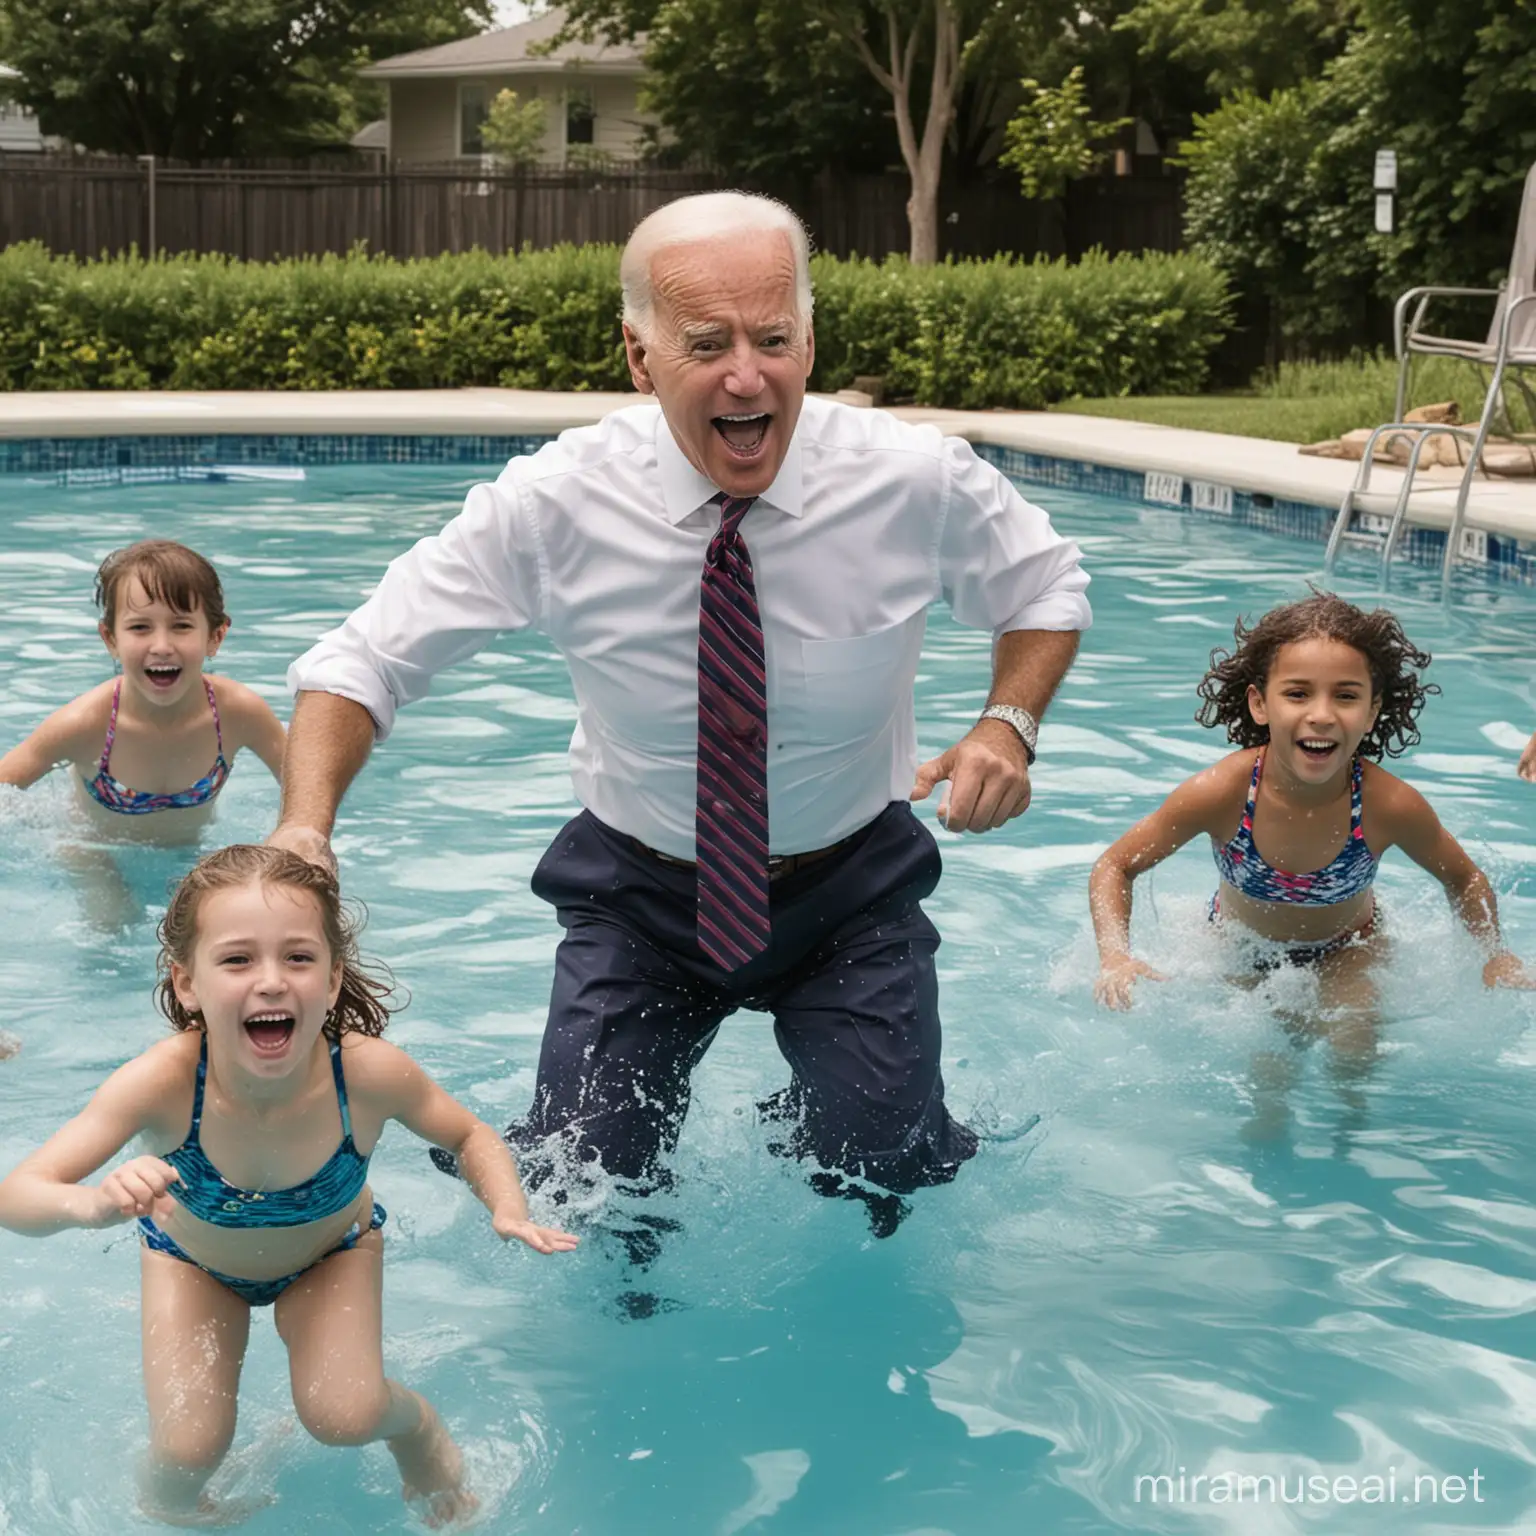 Joe Biden Chasing Children in a Lively Swimming Pool Scene